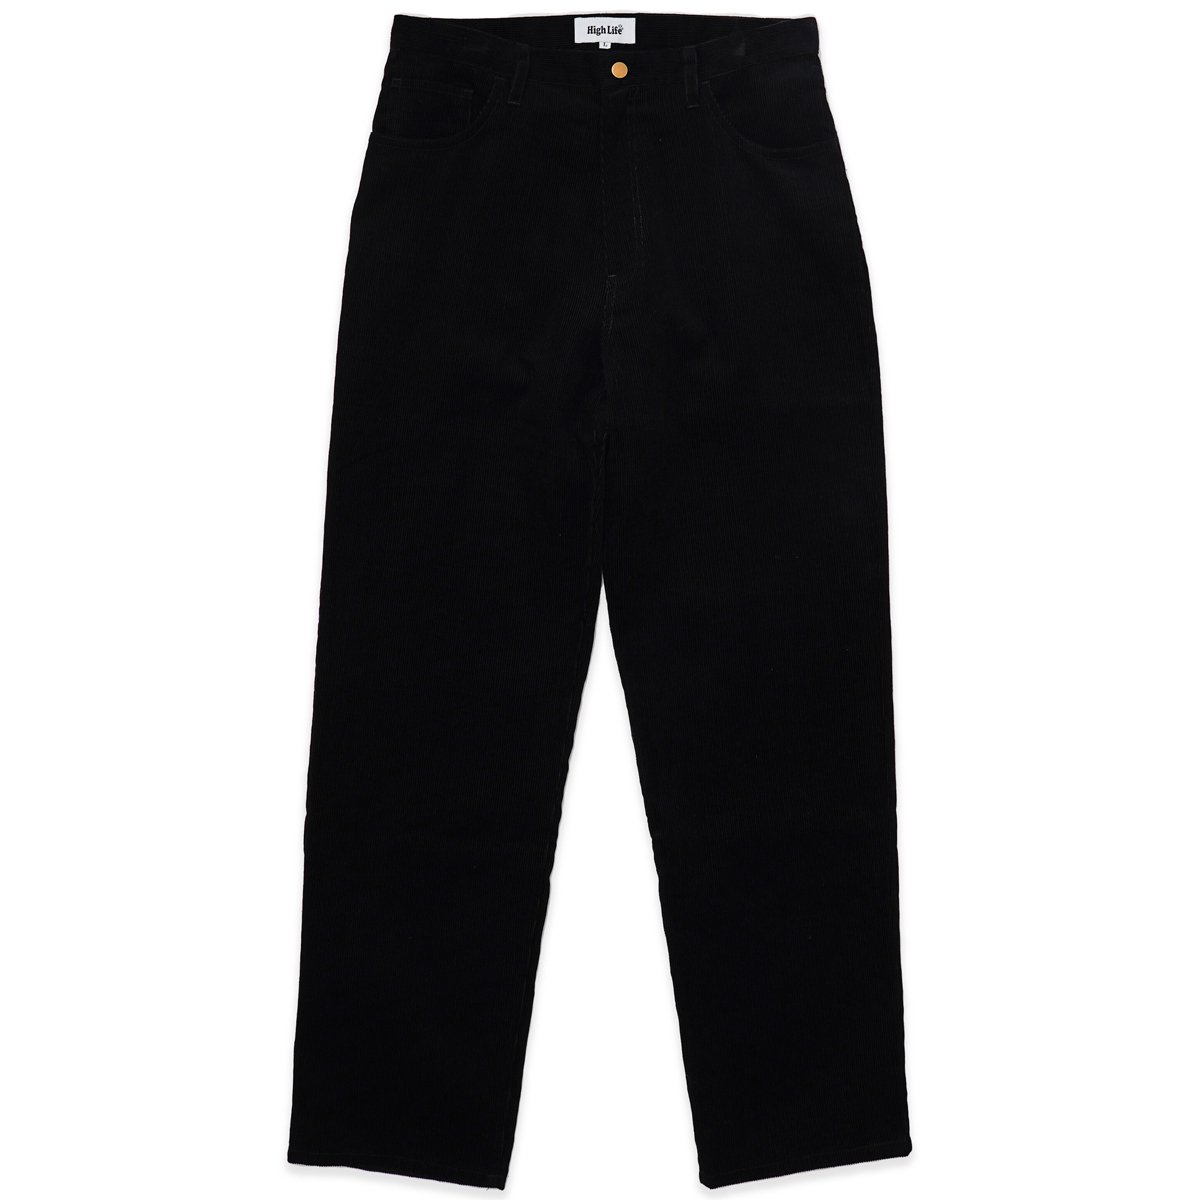 HighLife / Classic Corduroy Pants - Black - - HighLife Online